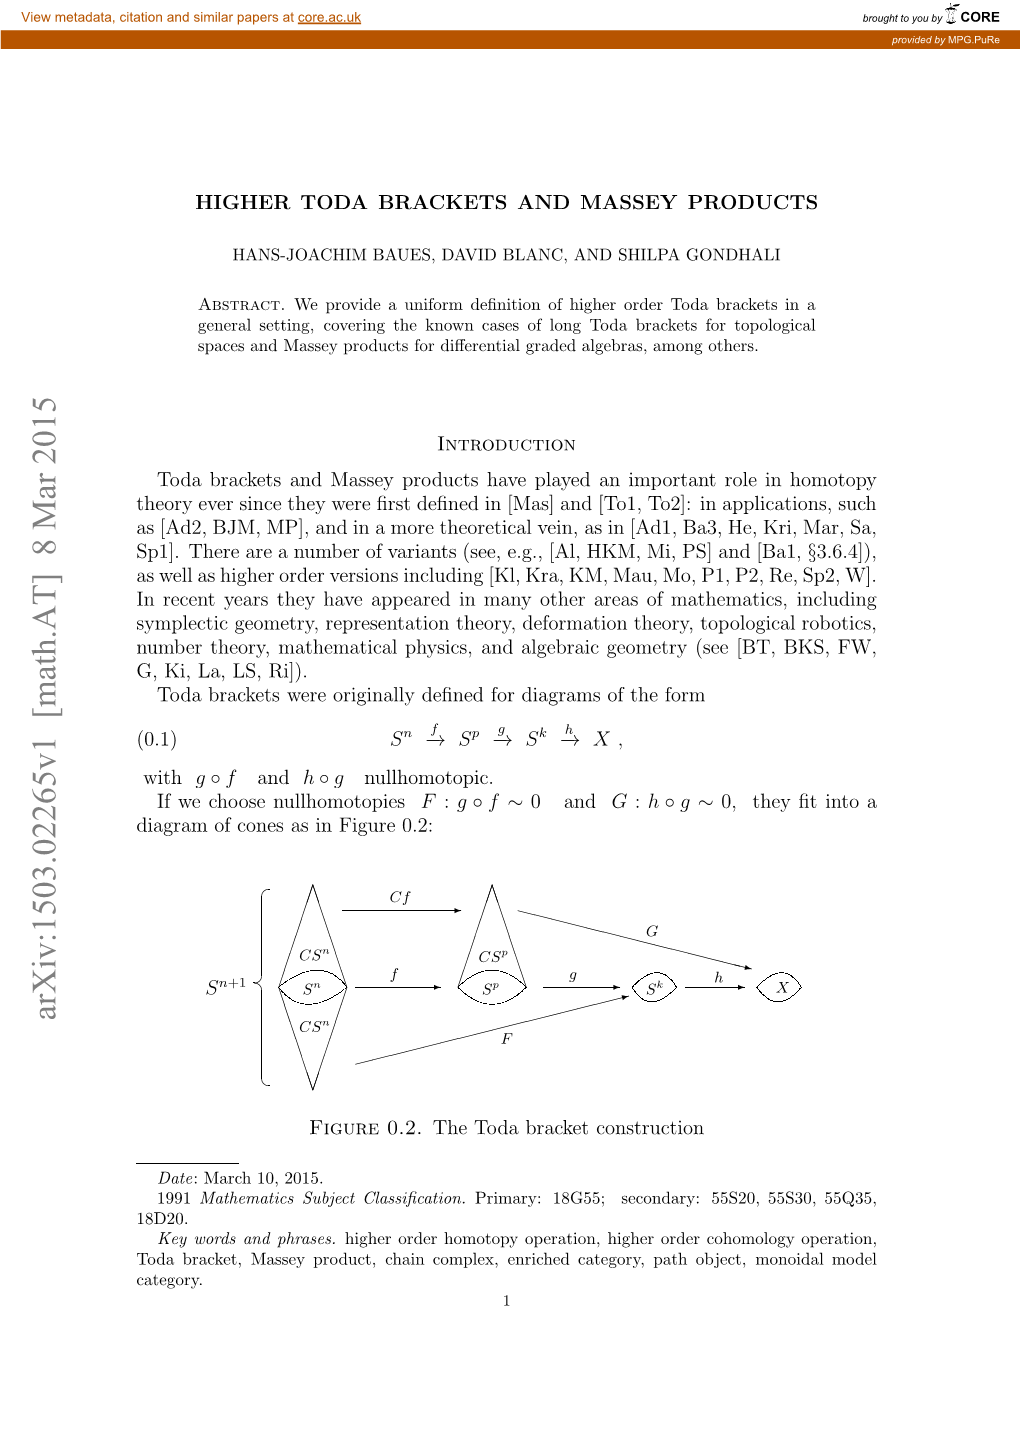 Math.AT] 8 Mar 2015 Iga Fcnsa Nfgr 0.2: Figure in As Cones of Diagram (0.1) (S Ri])